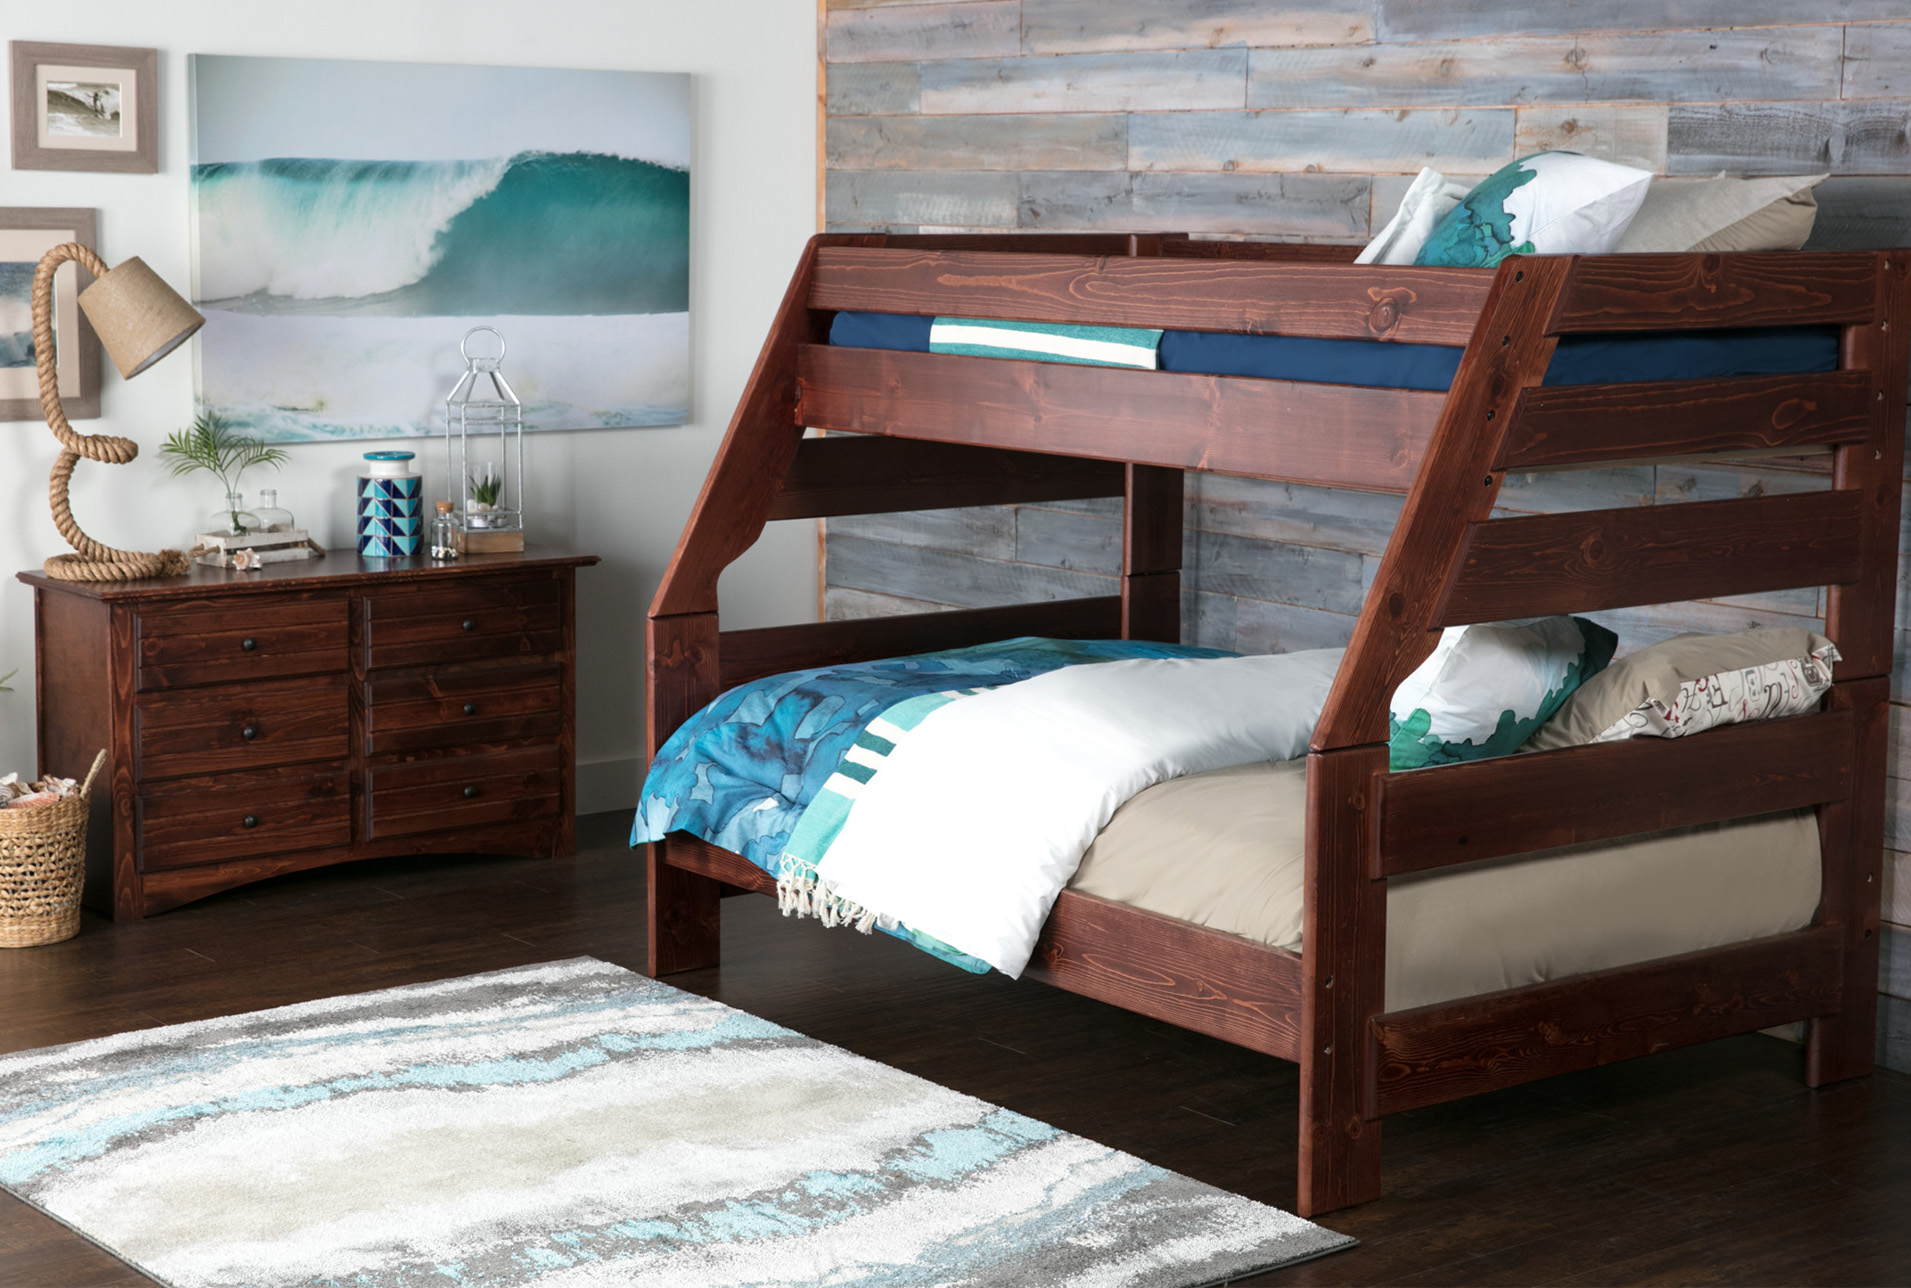 wooden bunk bed designs